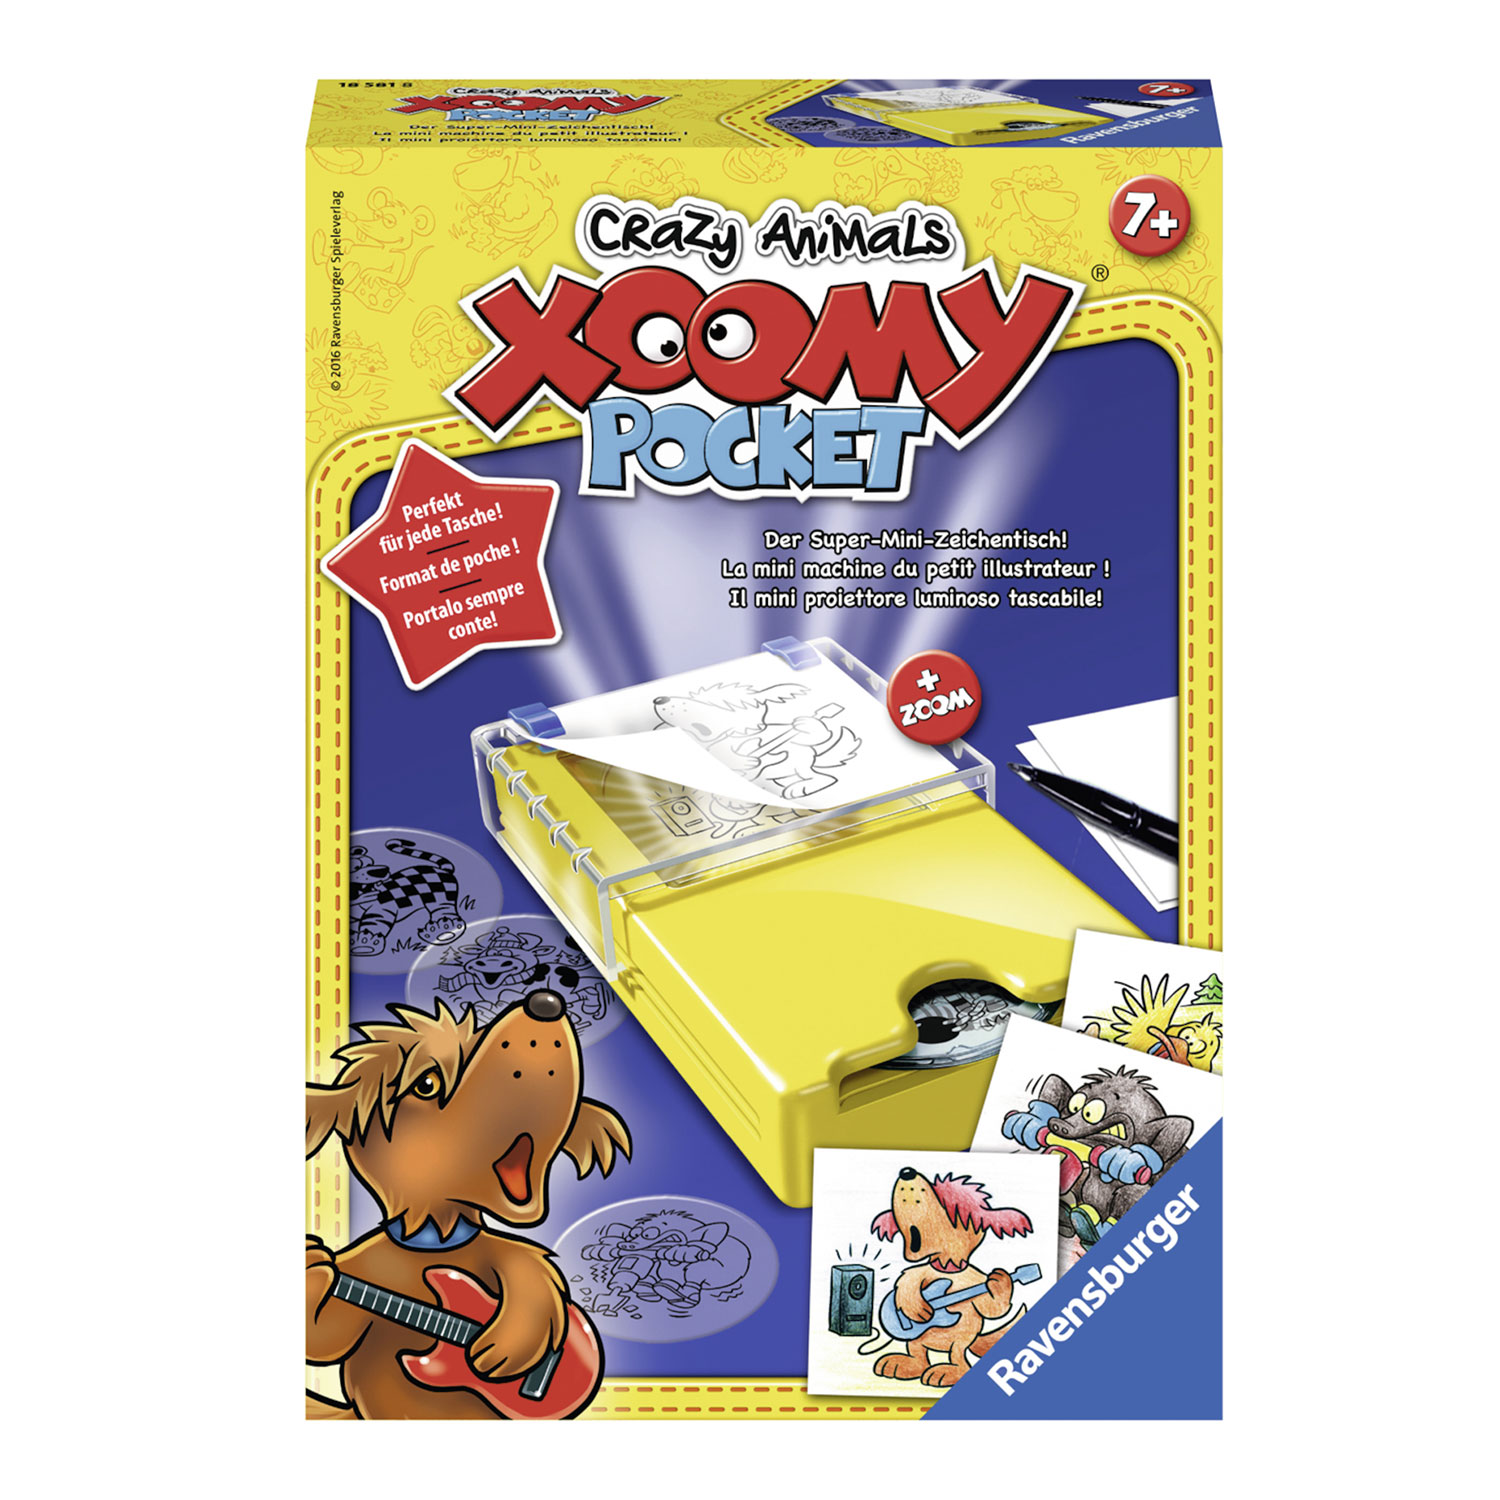 Xoomy Pocket - Crazy Animals